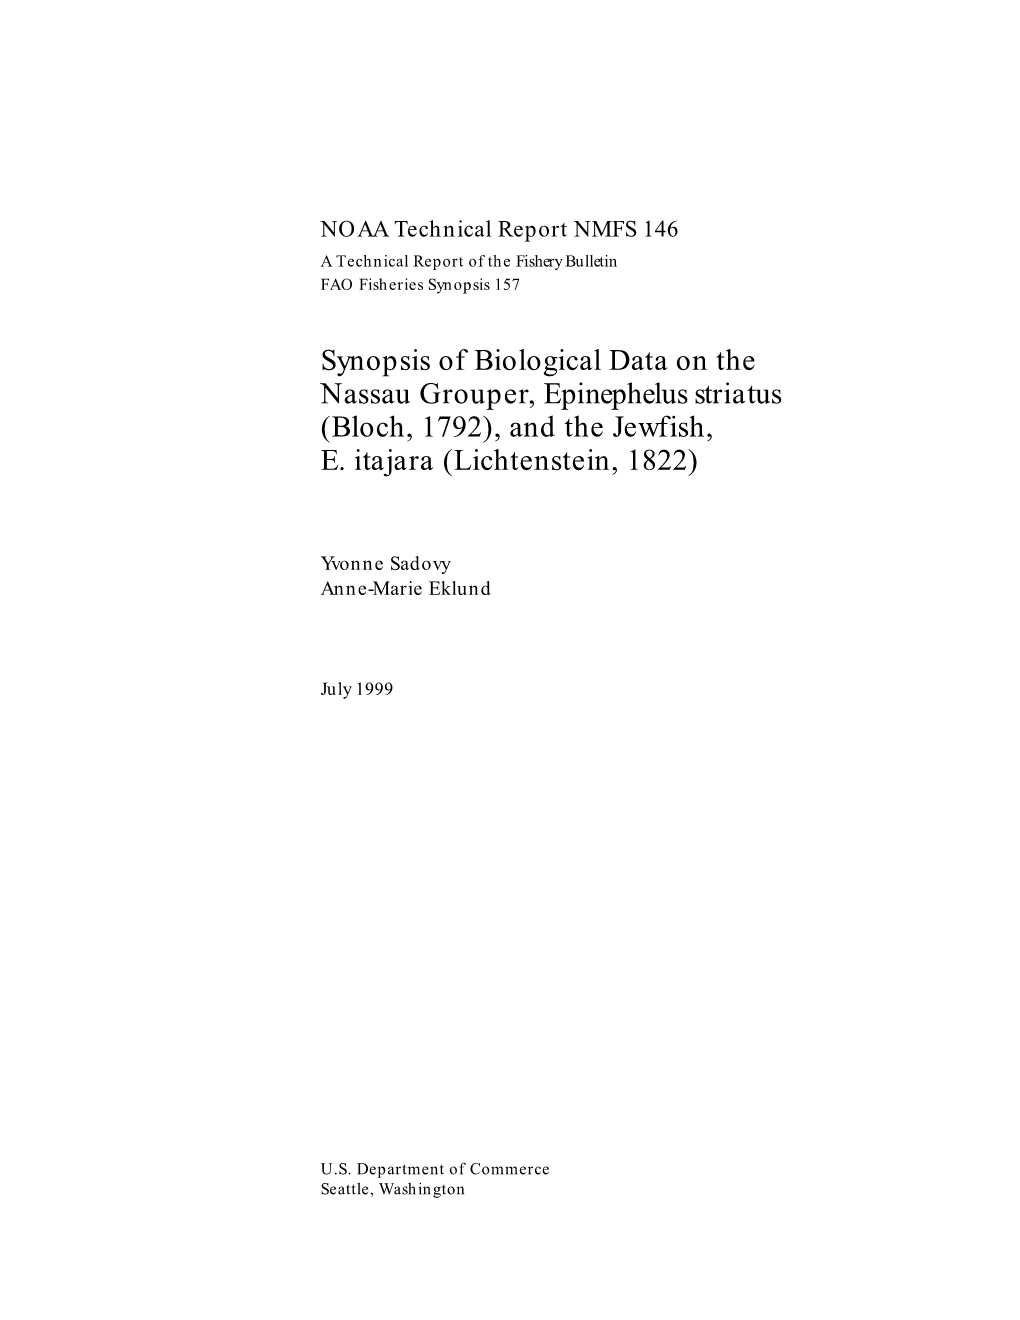 Synopsis of Biological Data on the Nassau Grouper, Epinephelus Striatus (Bloch, 1792), and the Jewfish, E